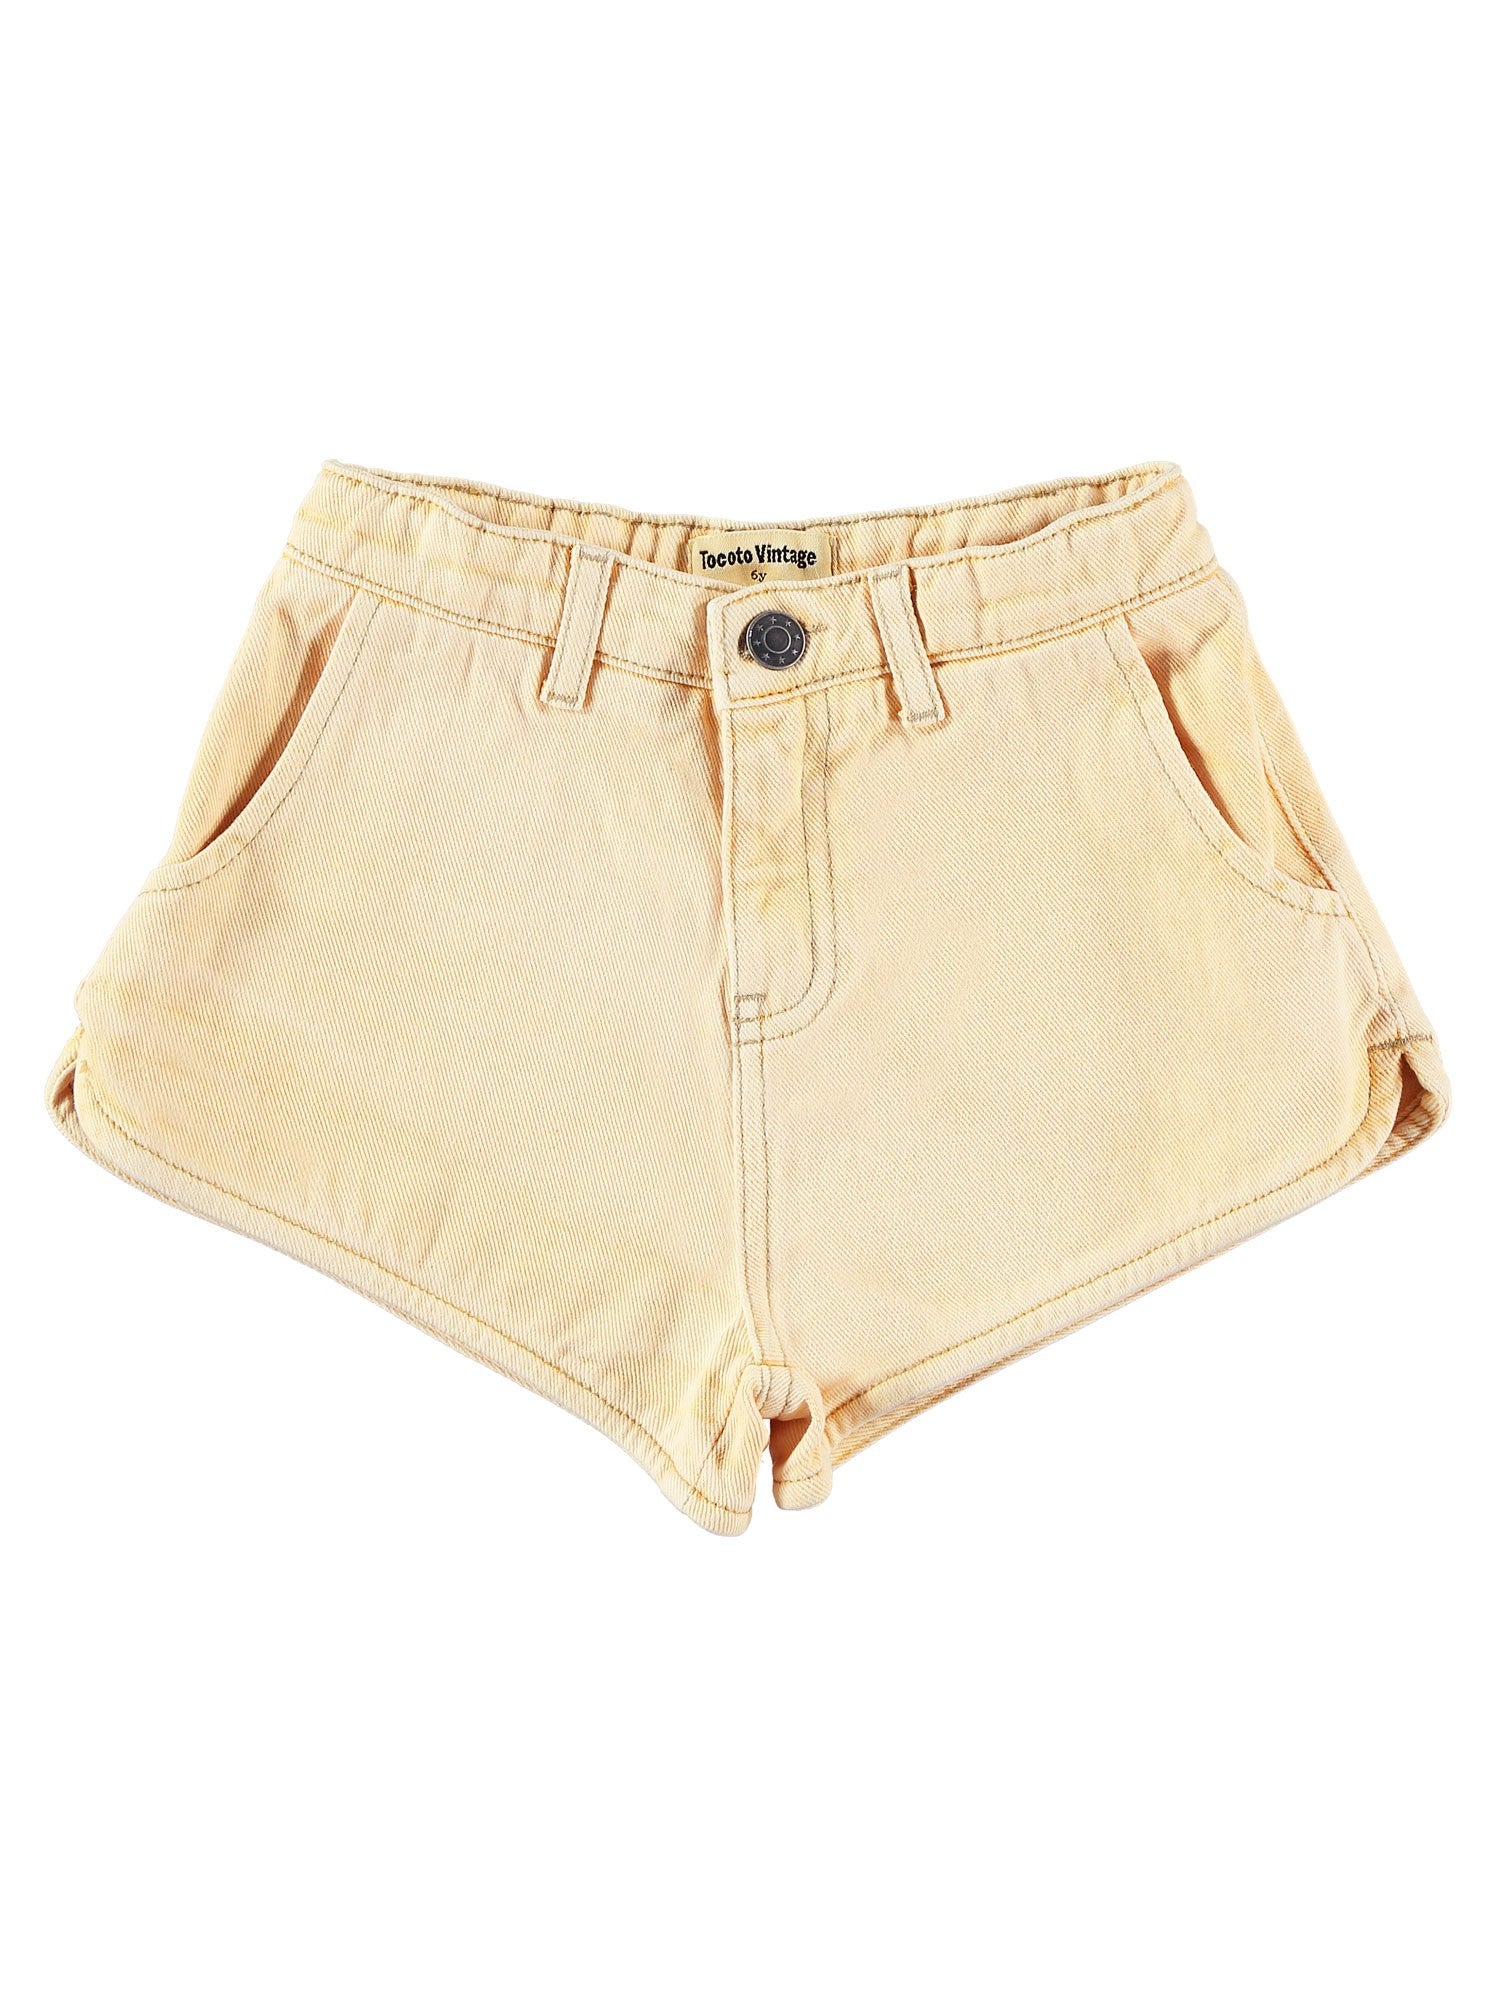 Tocoto Vintage - Twill Shorts